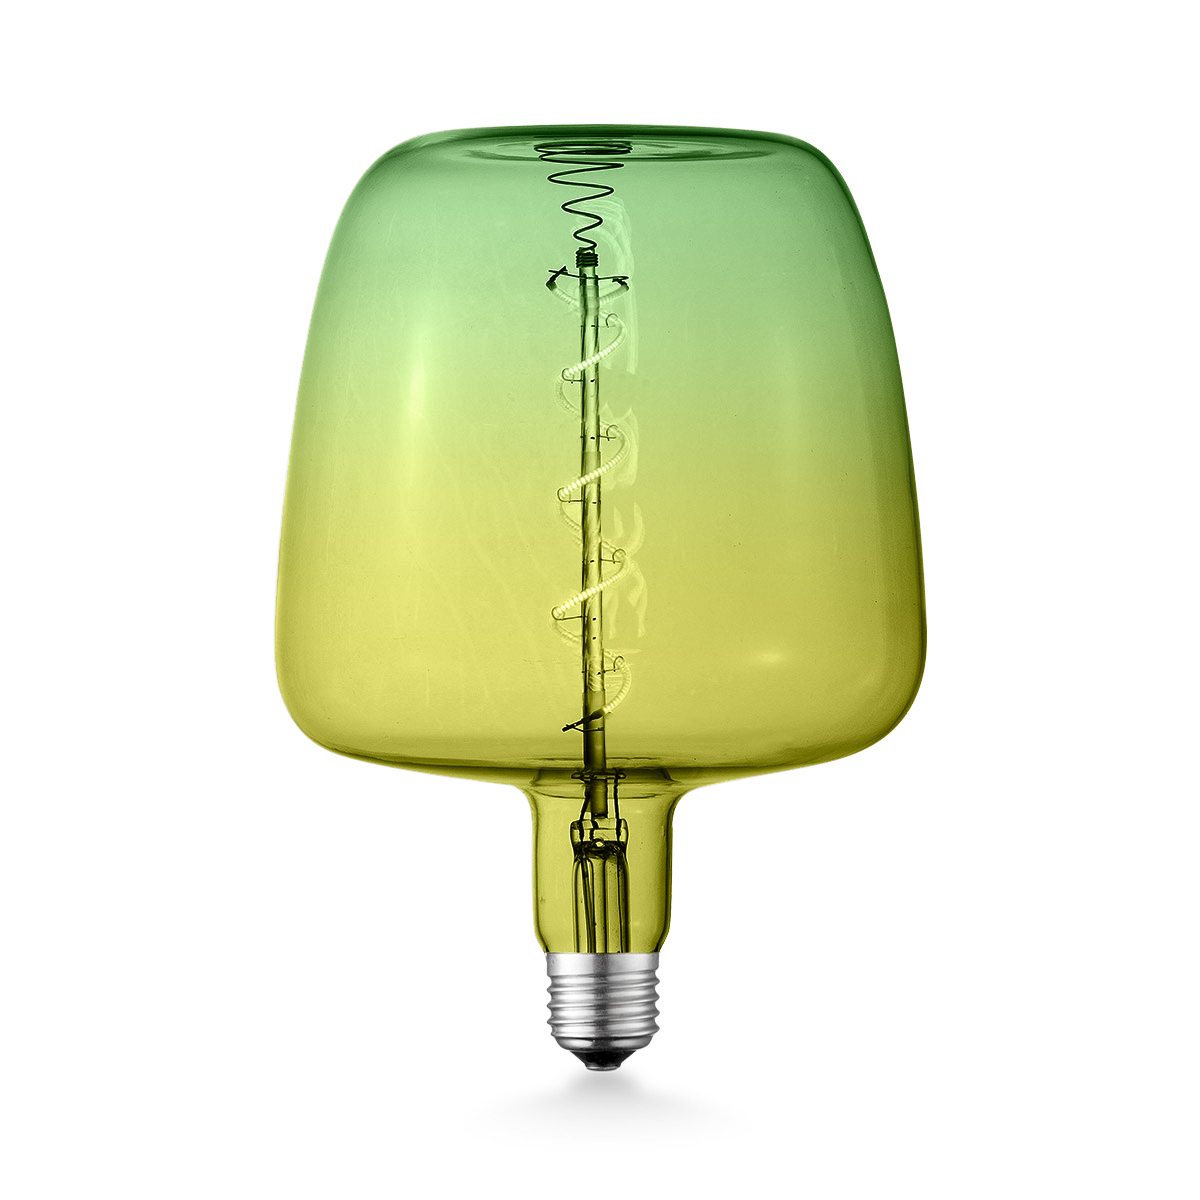 Tangla lighting - TLB-9003-04L - LED Light Bulb Single Spiral filament - 4W gradient color bulb - large - dusk - non dimmable - E27